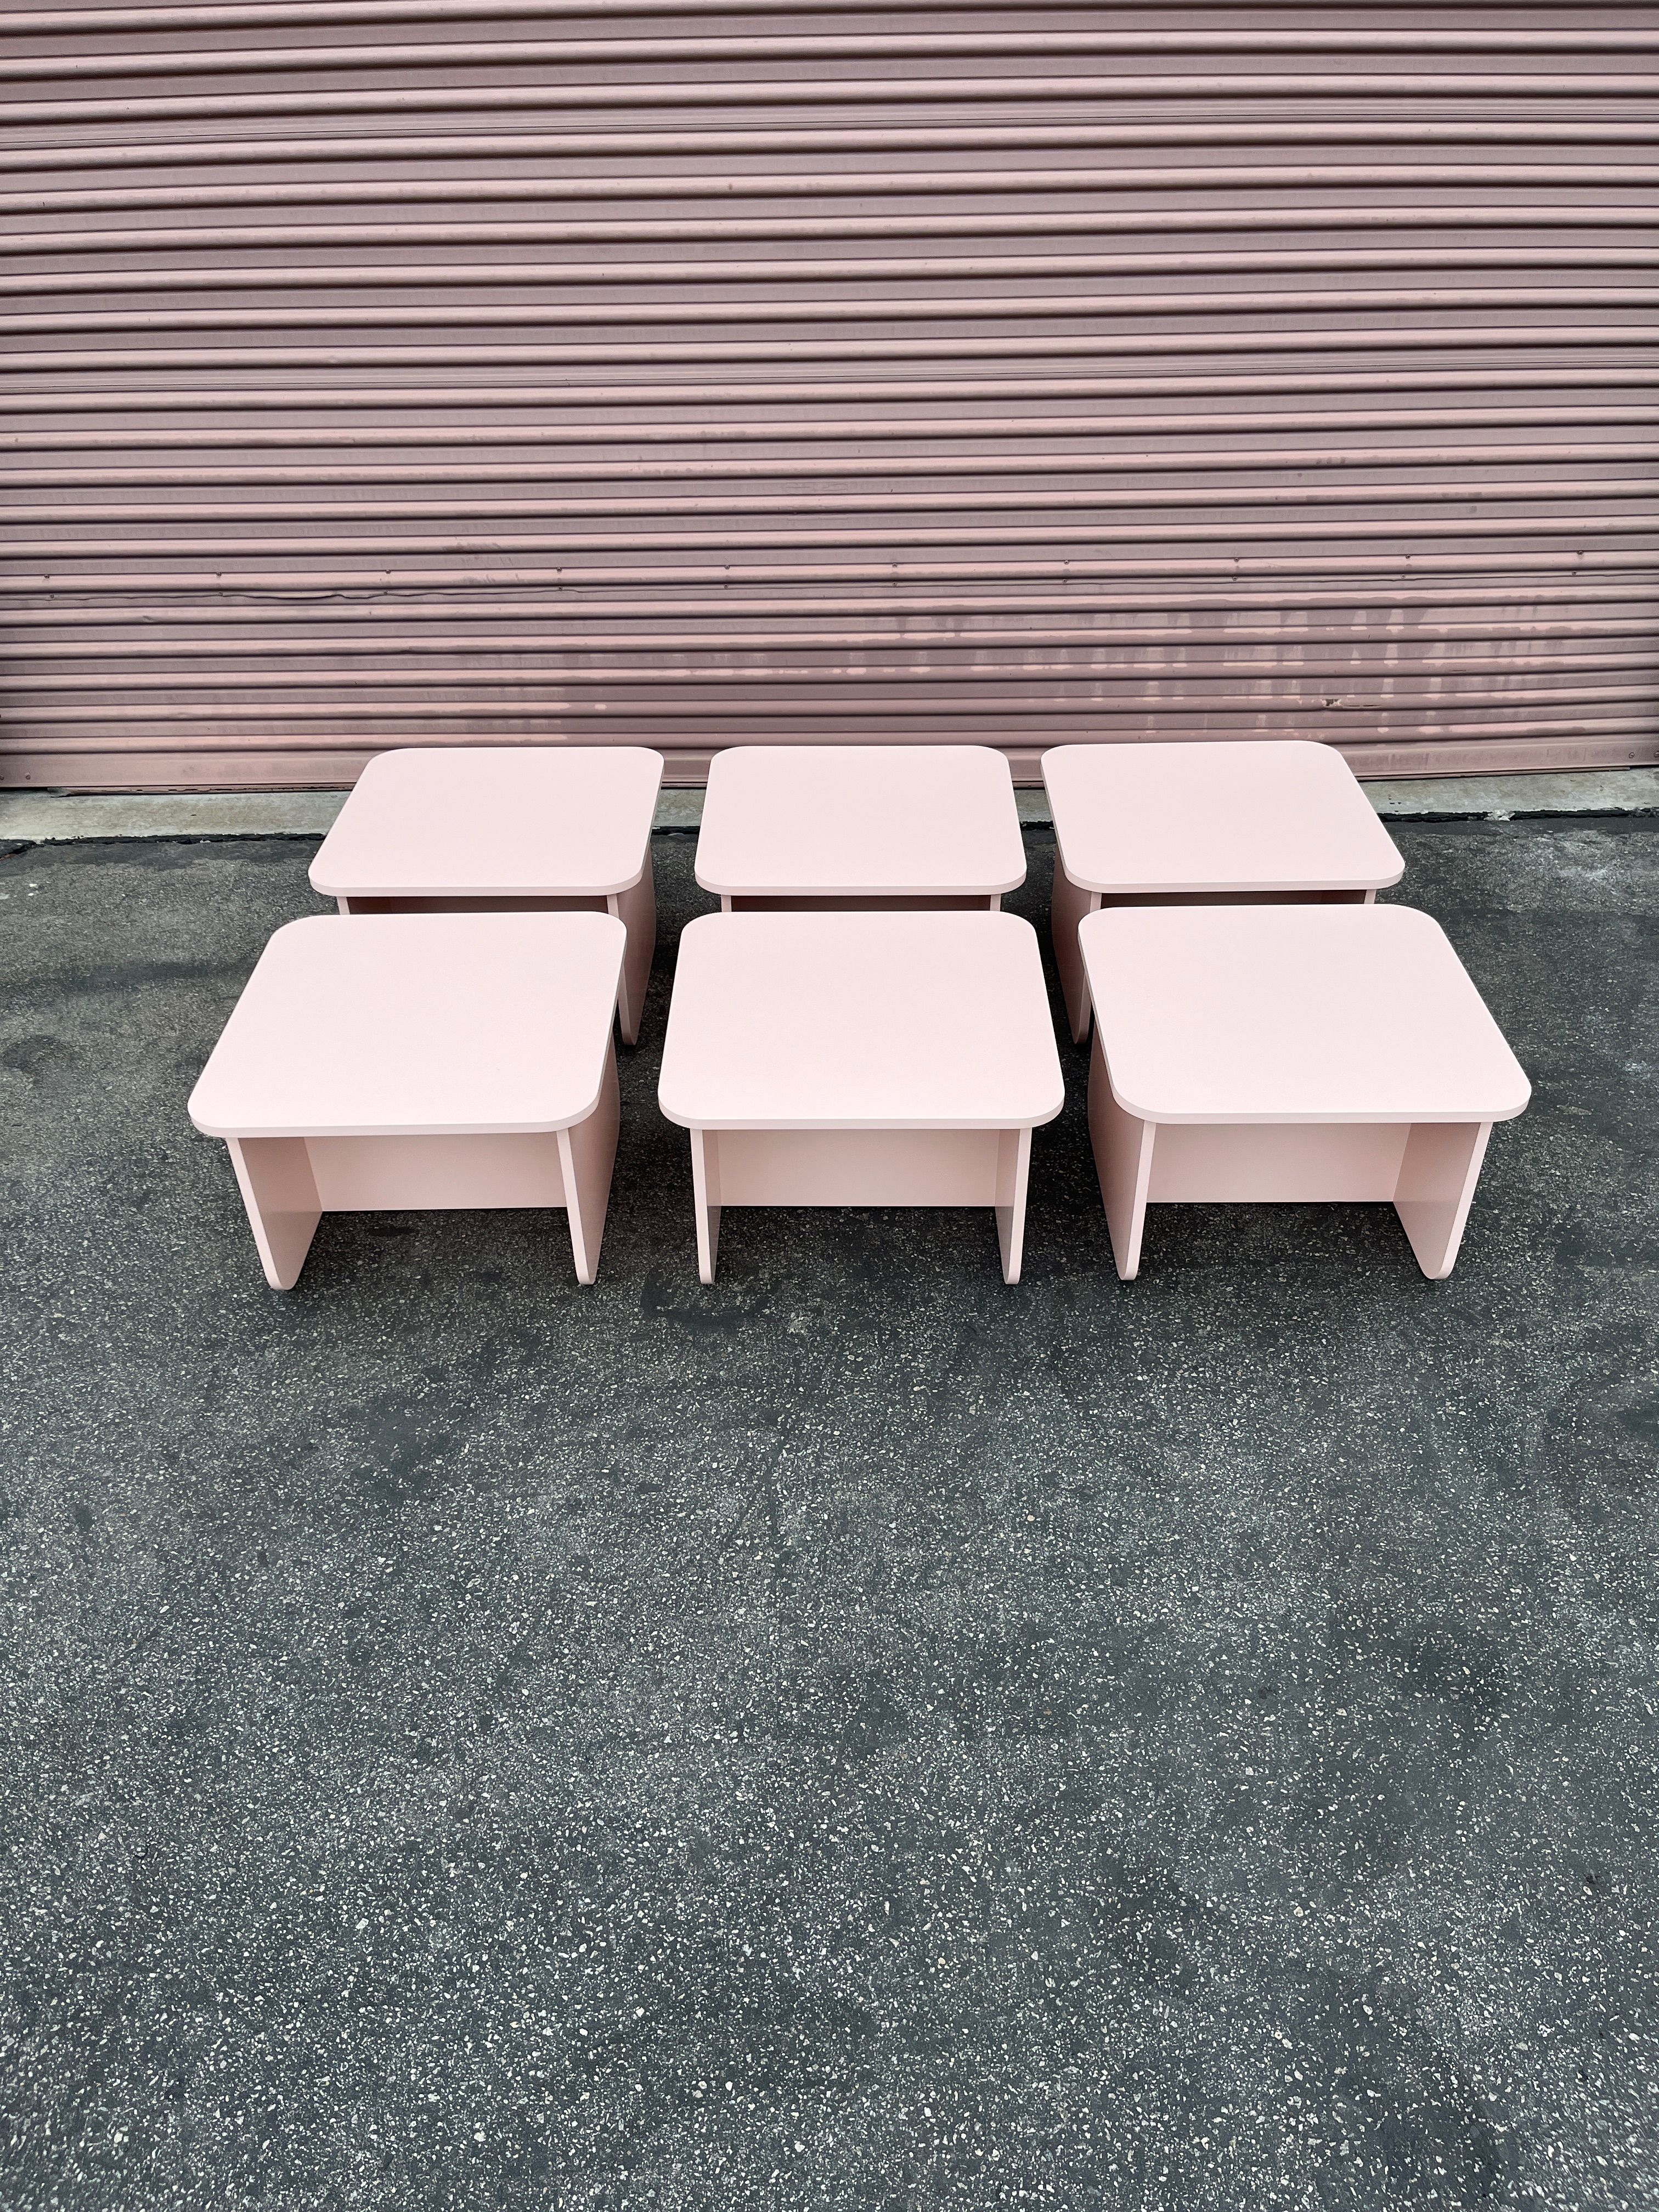  Square Side Tables - Buck LA product image 5